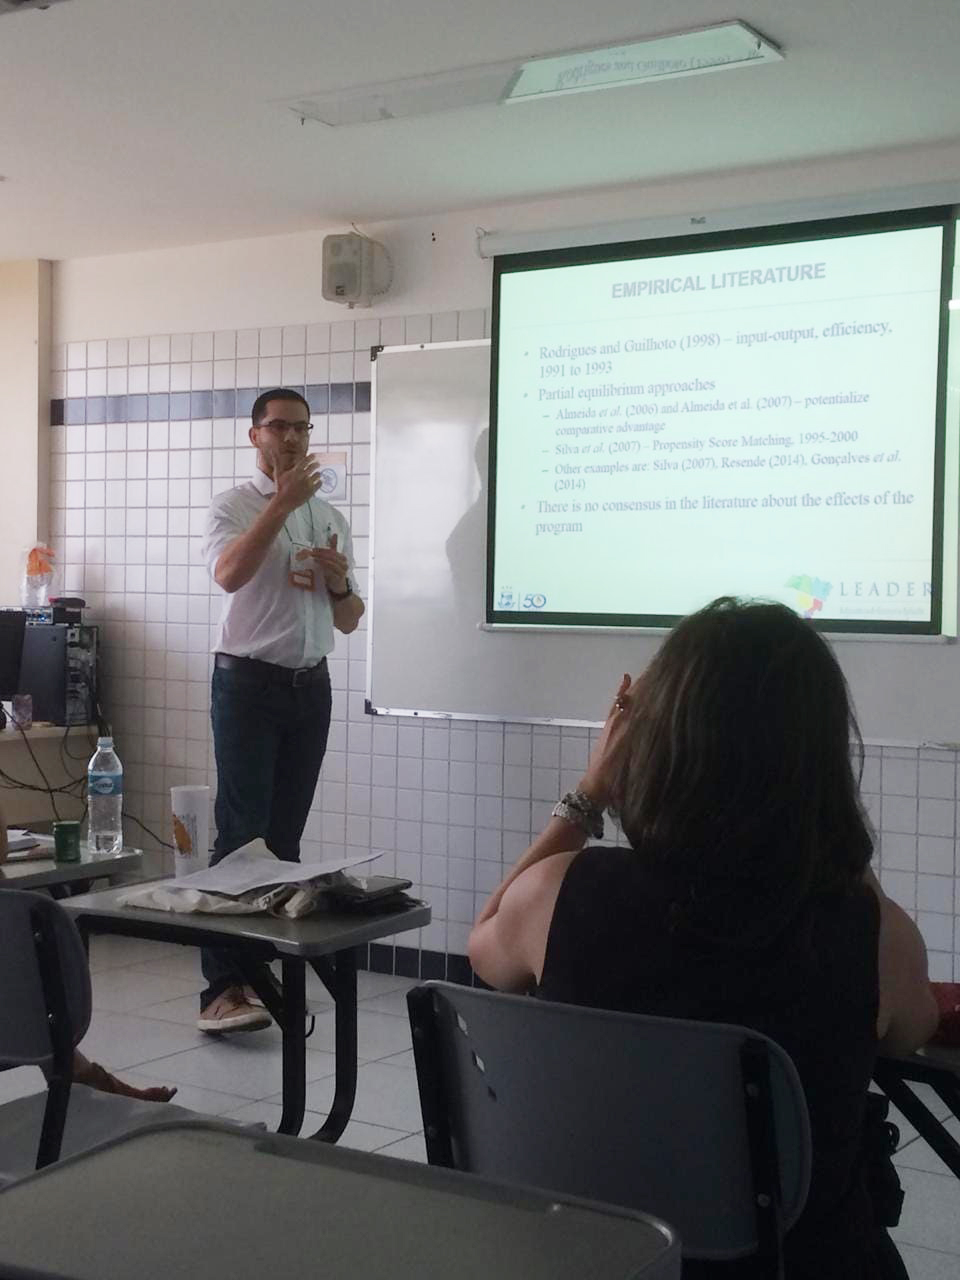 O professor Luiz Ribeiro apresentando a sua pesquisa "Regional Funding and Regional Inequalities in the Brazilian Northeast"